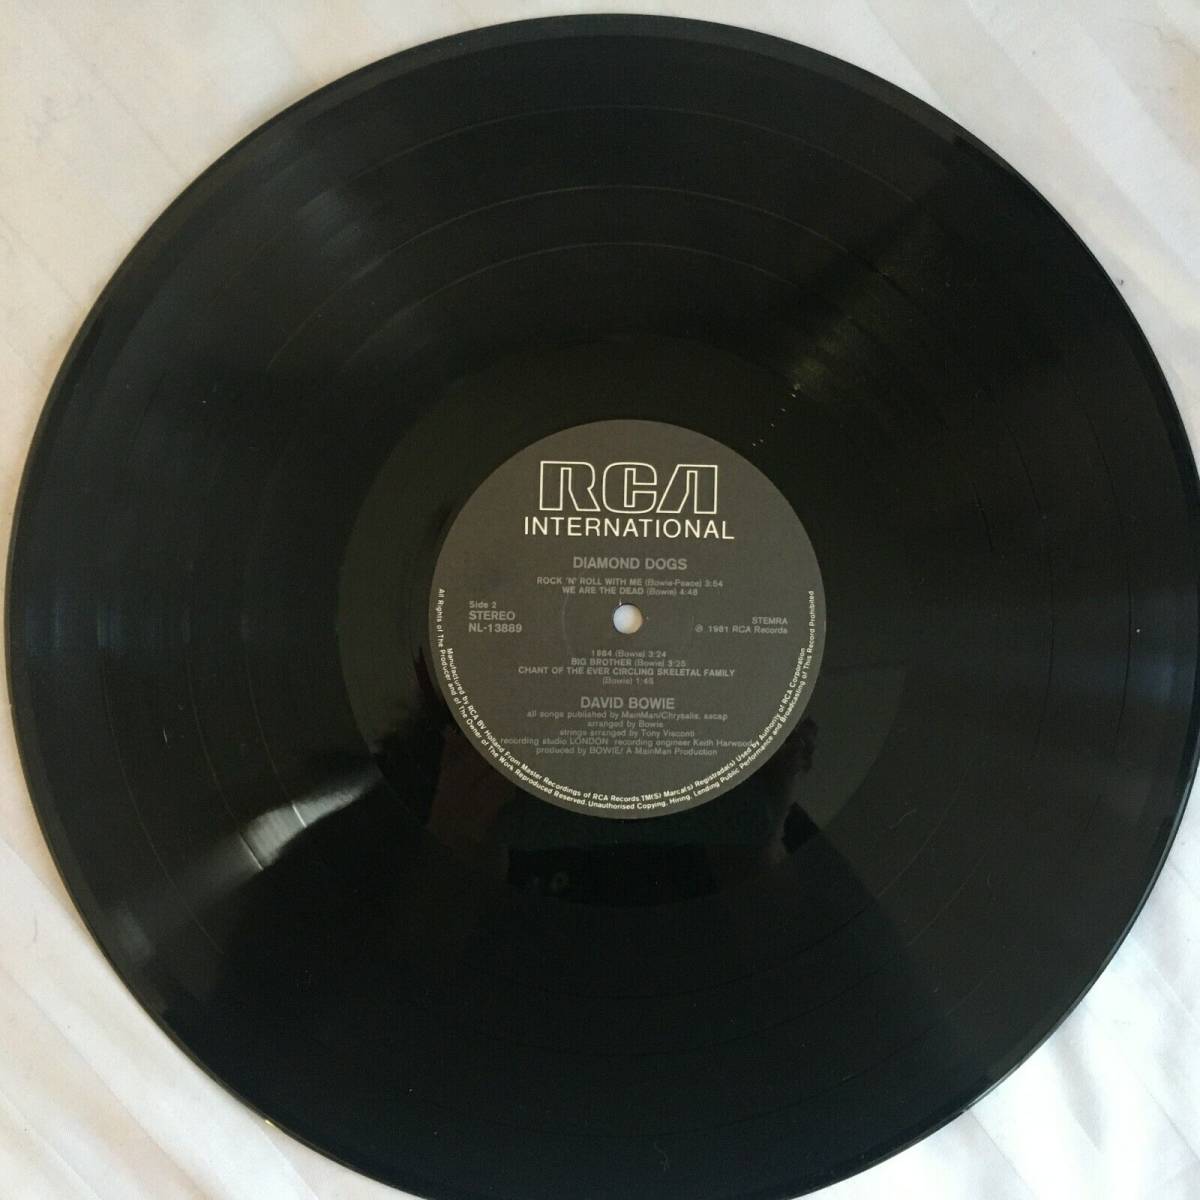 DAVID BOWIE Vinyl LP DIAMOND ドッグ / オリジナル 1981 Holland RCA